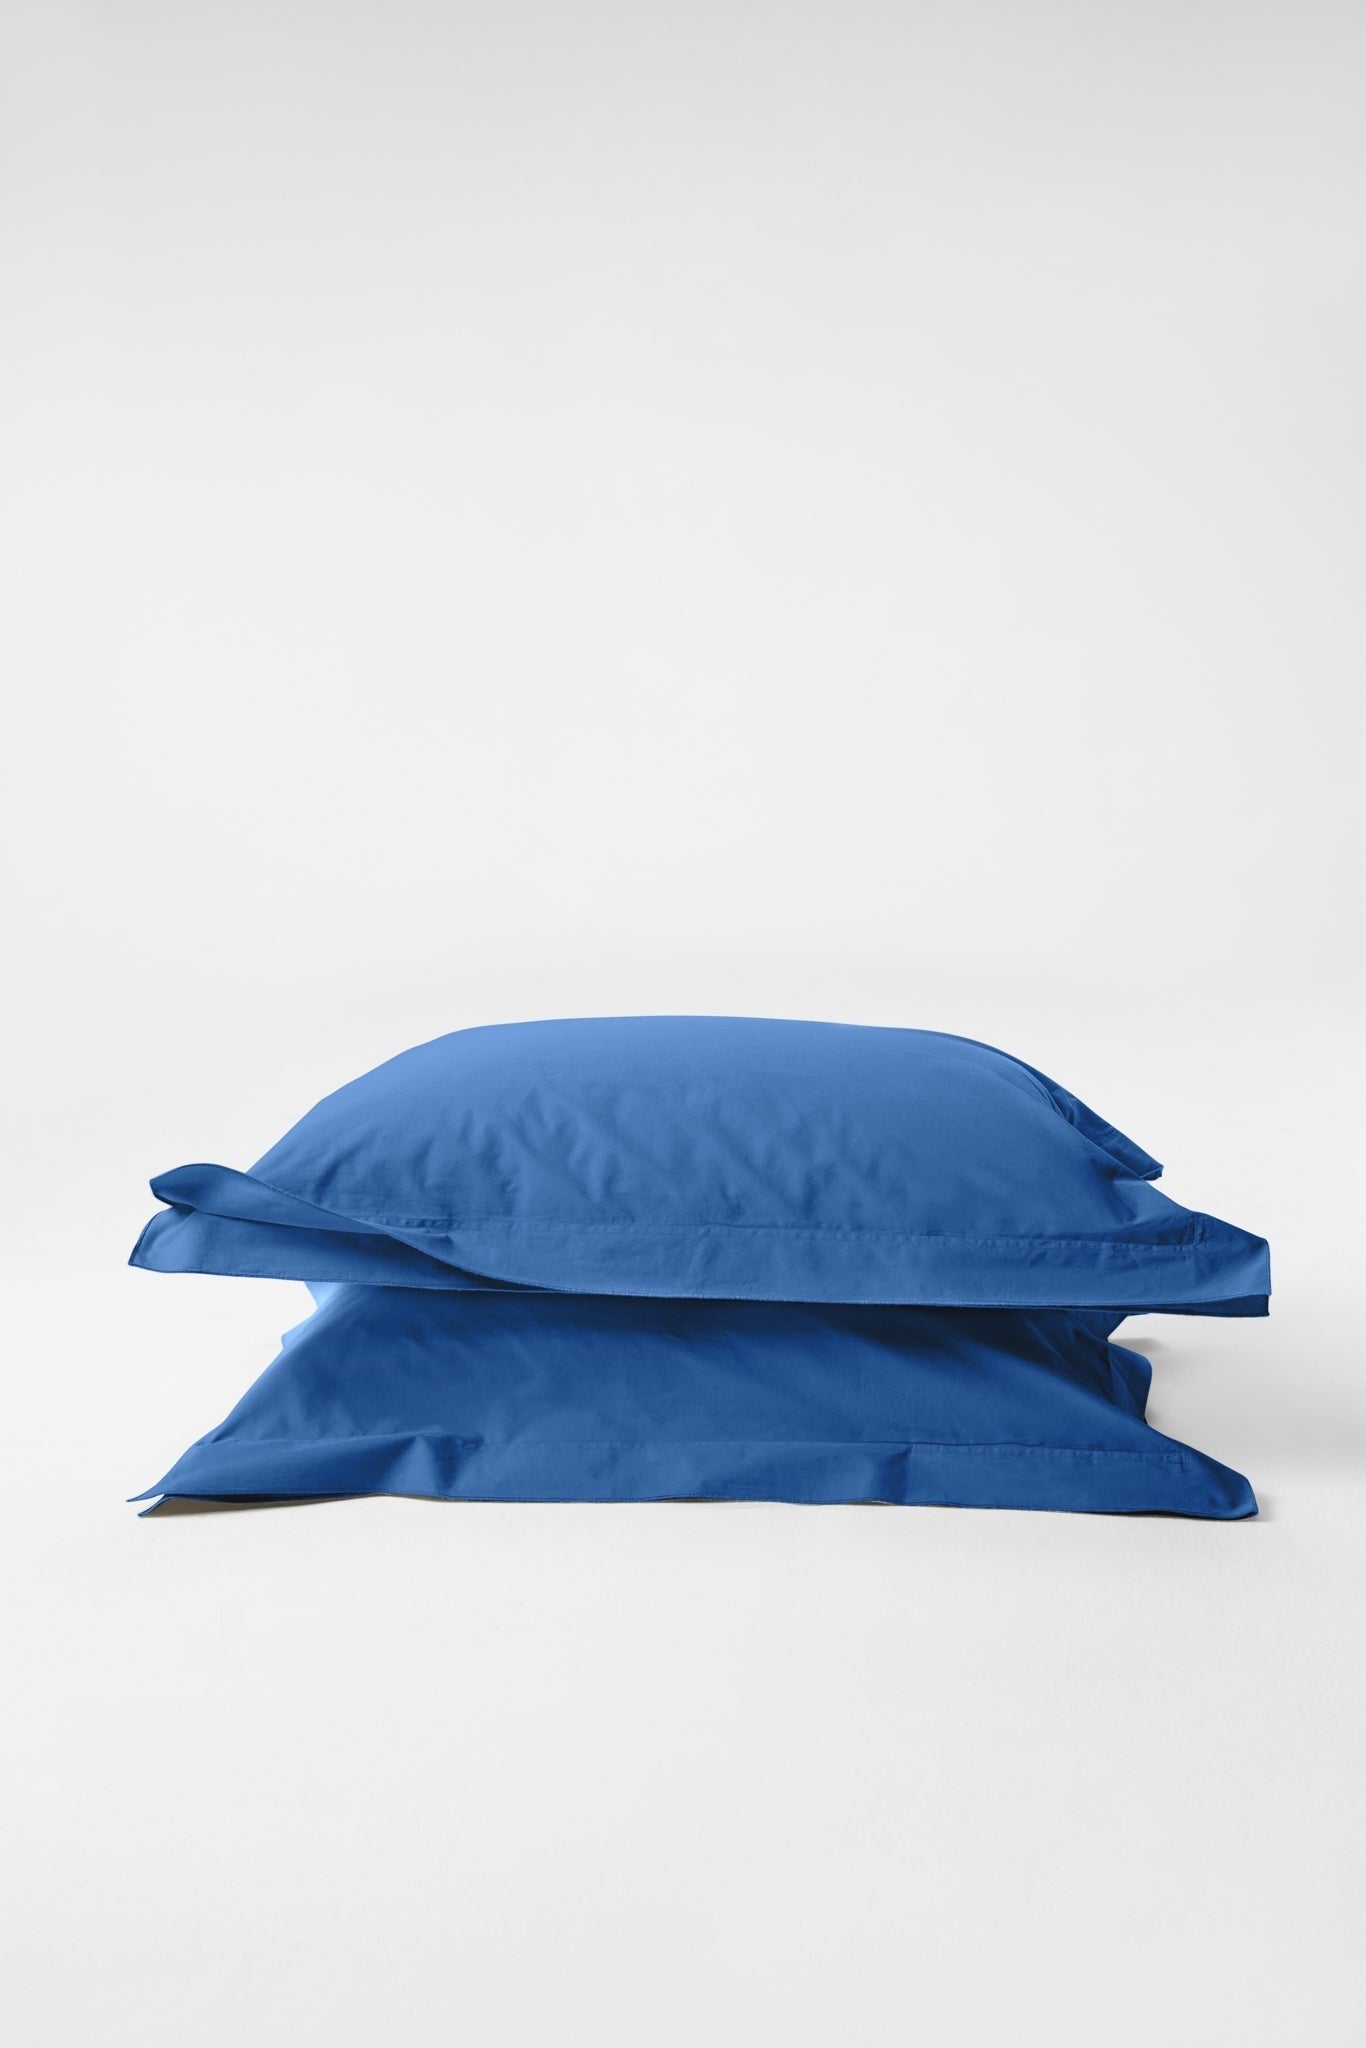 Mono Organic Cotton Percale Pillow Pair - Blue Blue Pillows in King Pillow